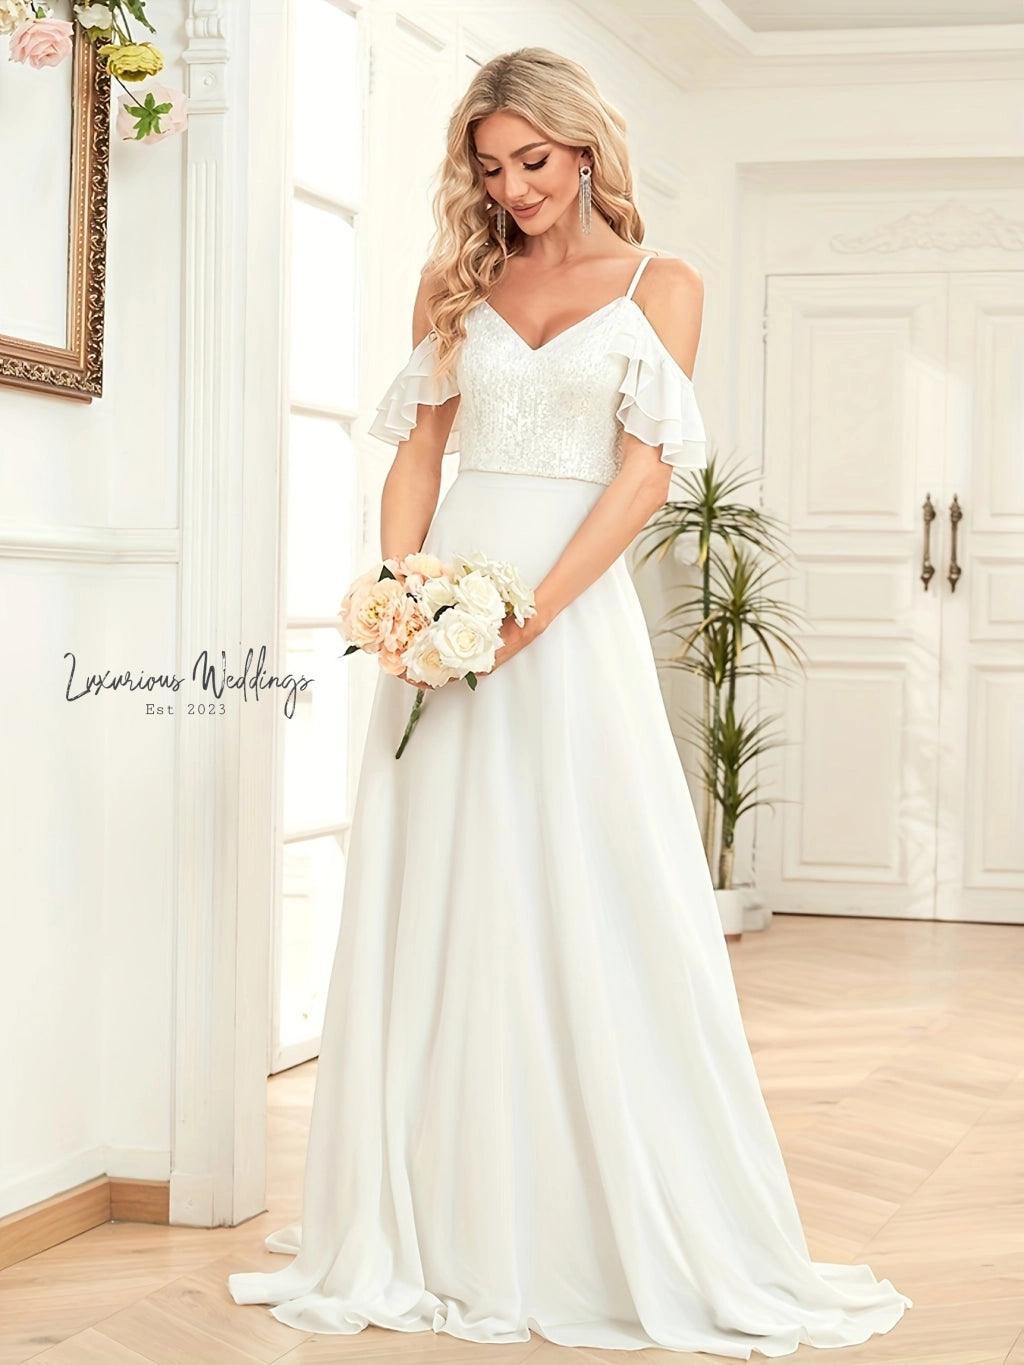 Stunning Sequin Wedding Dress - Elegant, Versatile, High-Quality - Luxurious Weddings